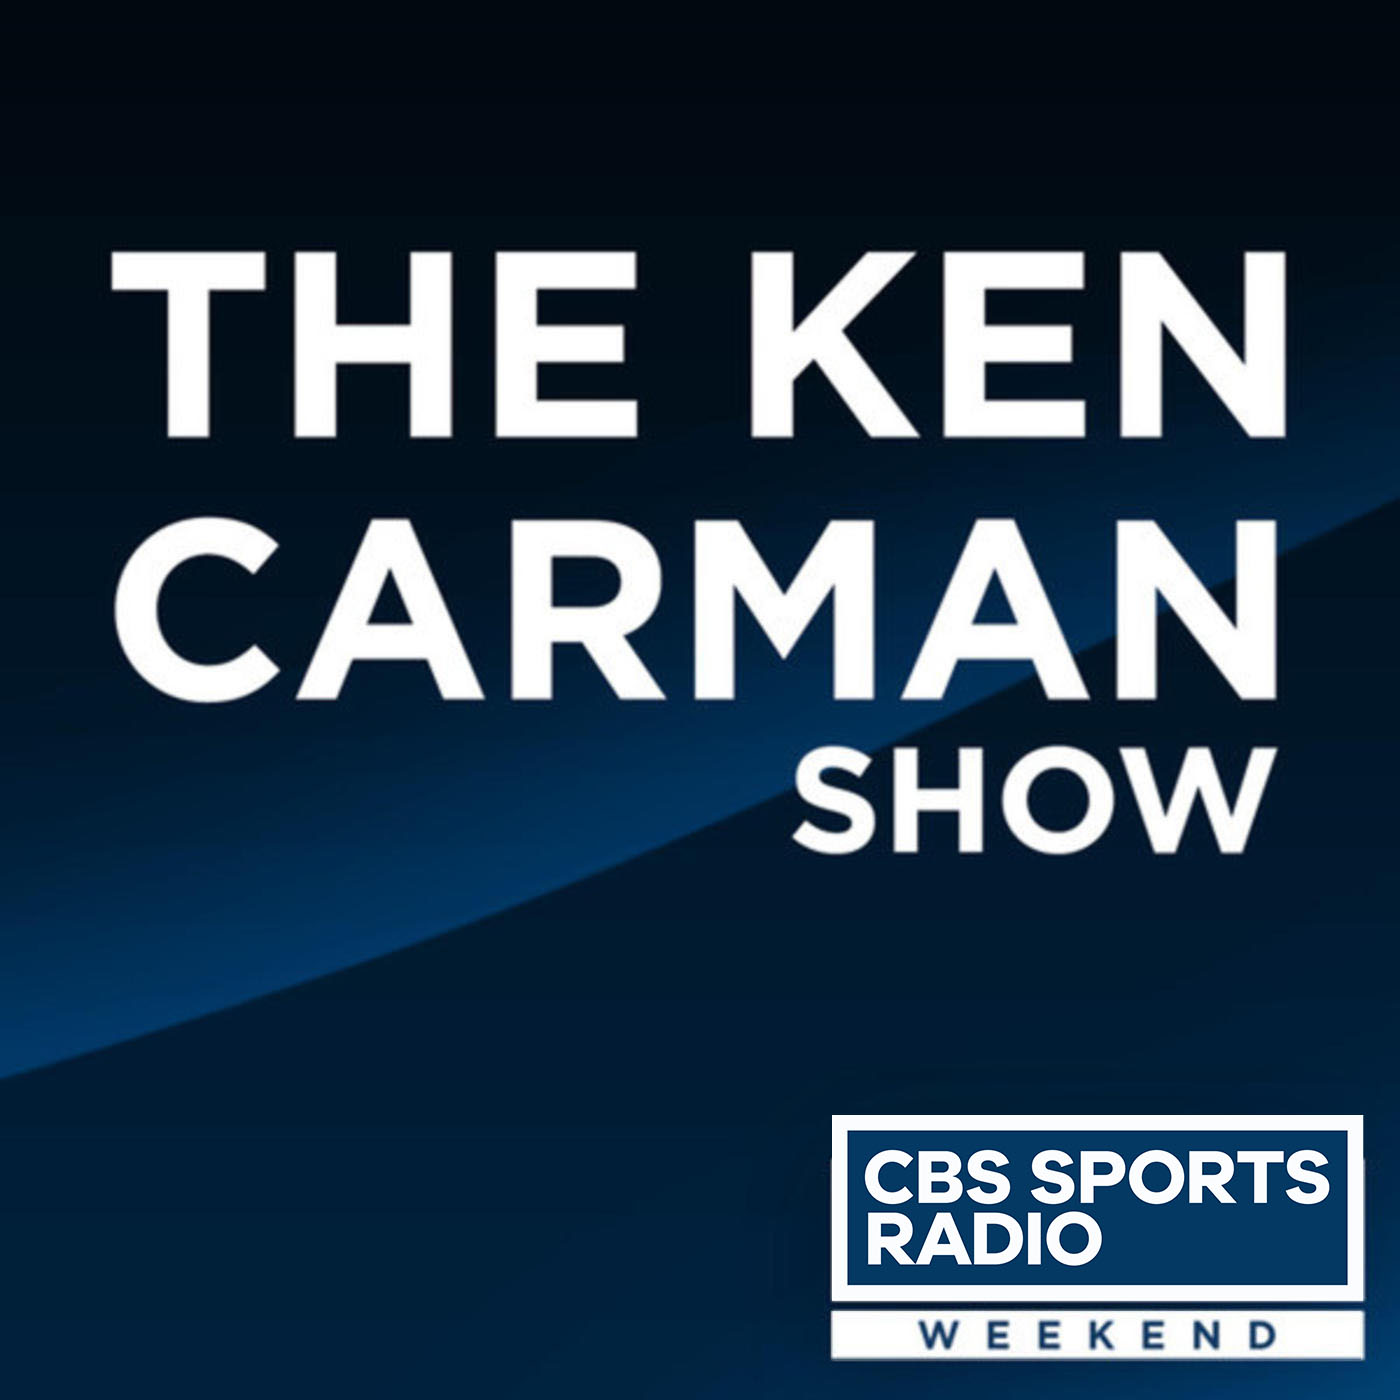 The Ken Carman Show 04-20-19 Hour 3